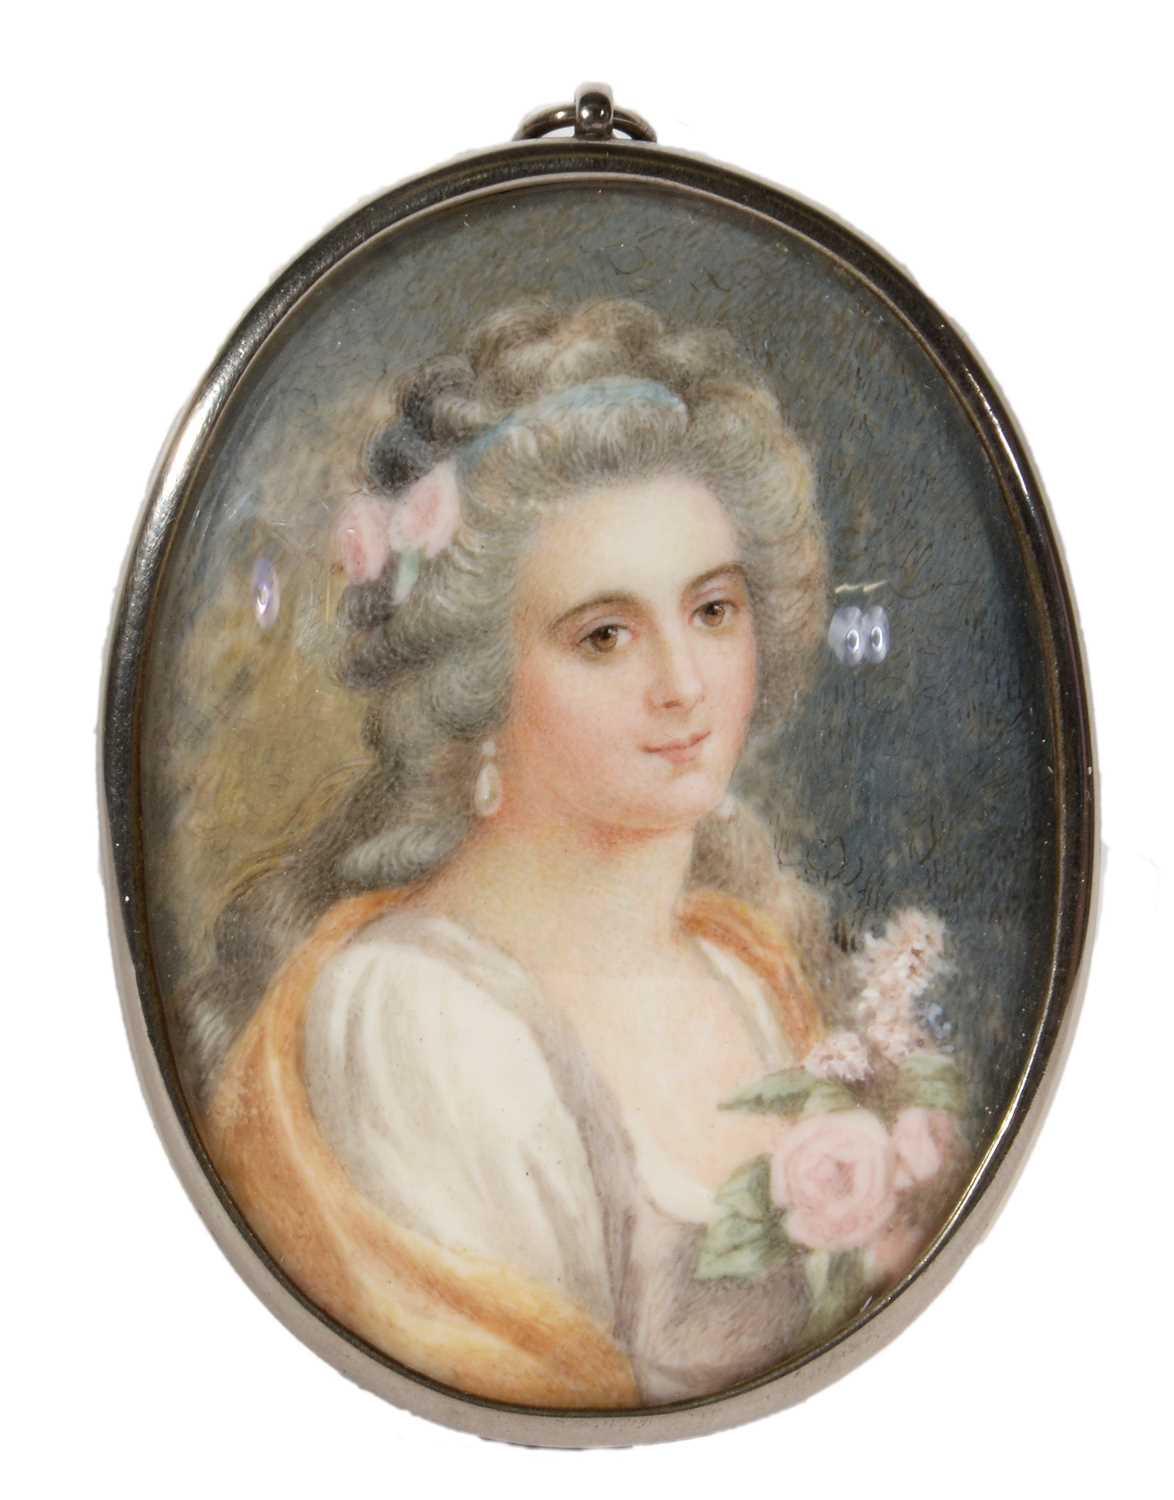 Lot 87 - French School, late 18th Century - Portrait miniature